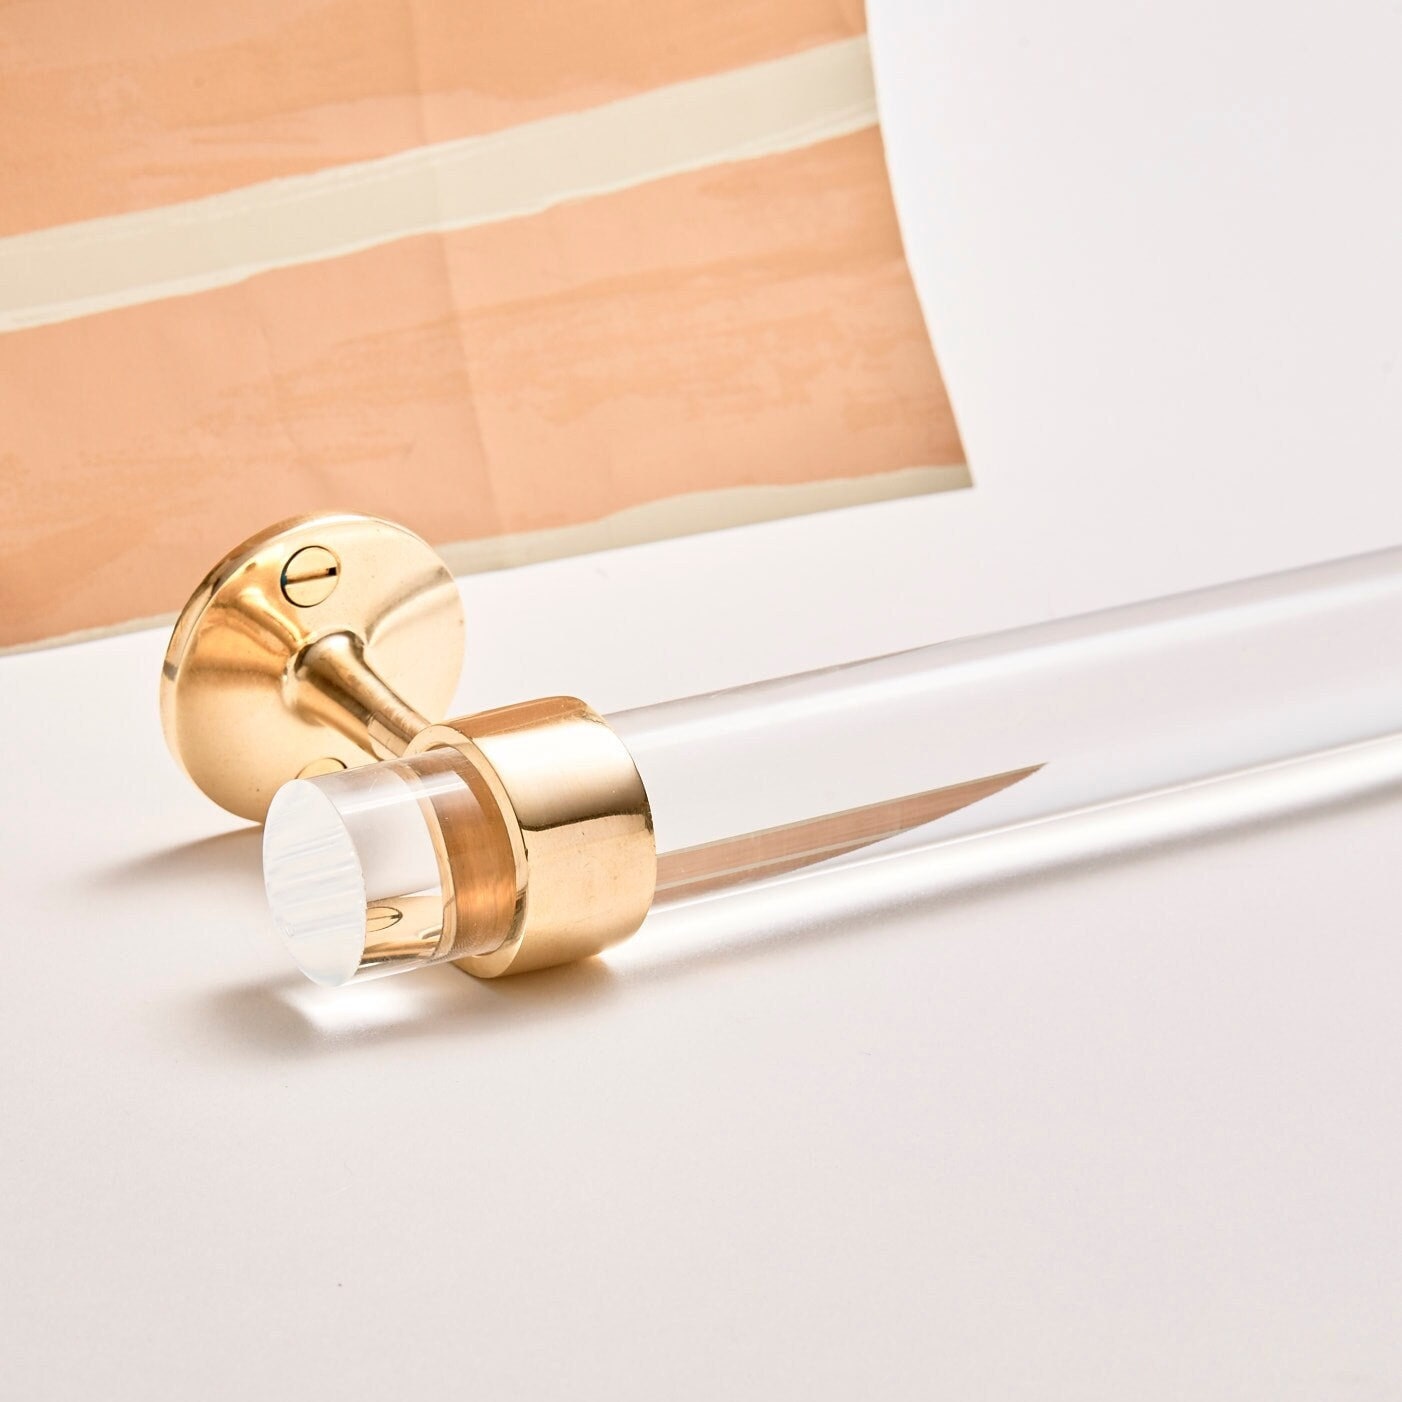 Lucite Toilet Paper Holder W/ Brass Hardware by Luxholdups, Brass Hollywood  Regency Bathroom Accessories Set, Lucite Tissue Holder 